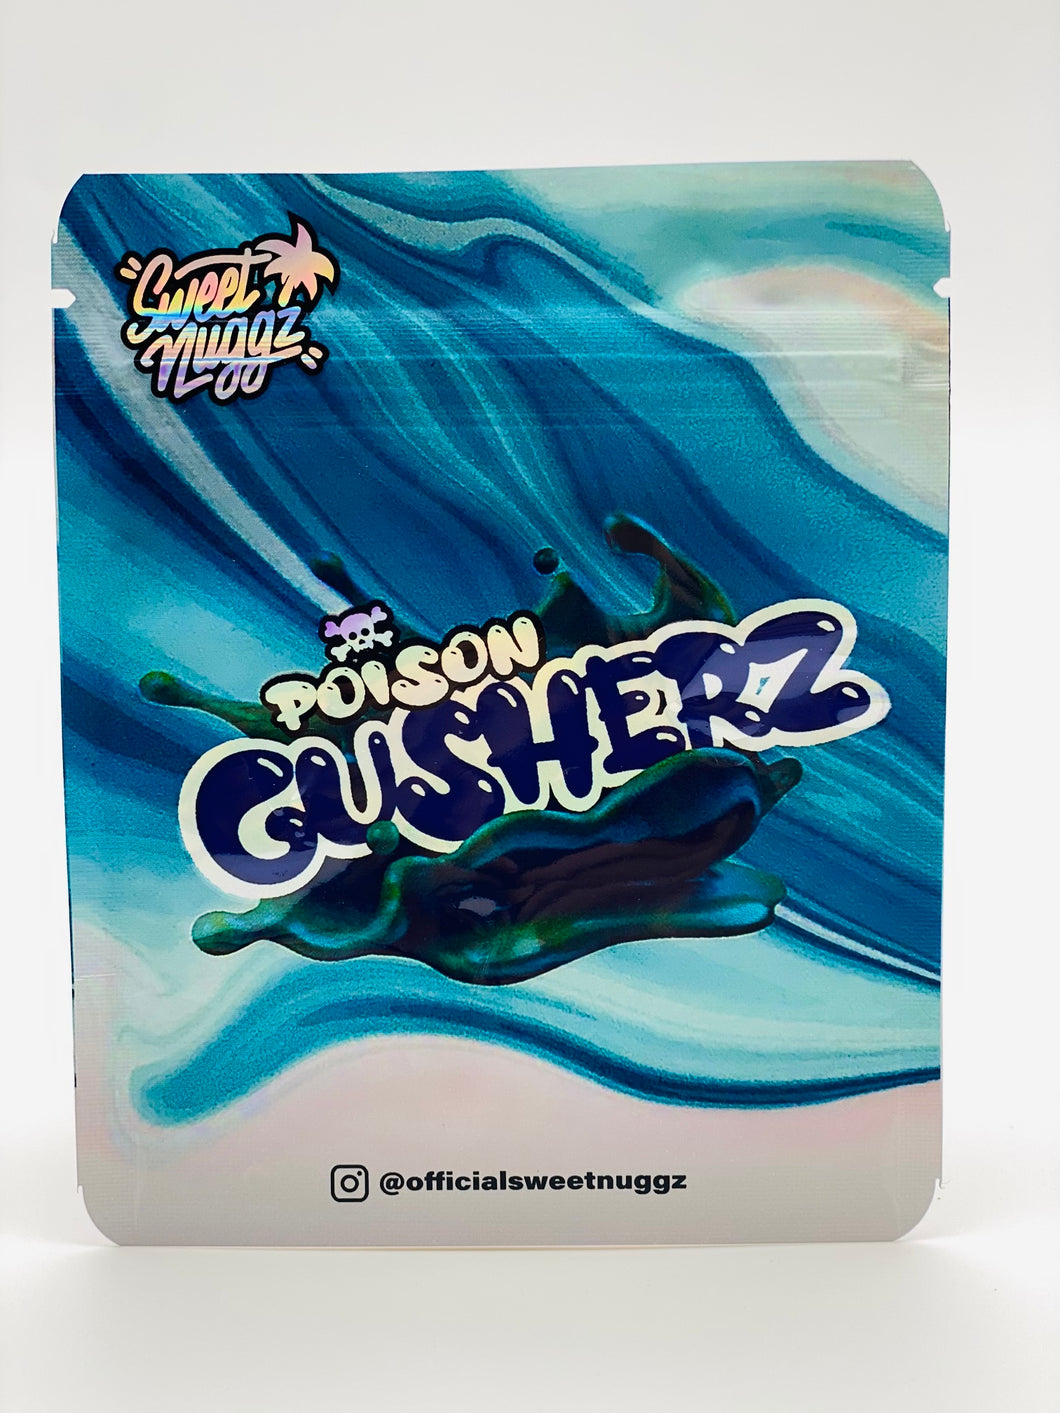 50 Gusherz 3.5-gram empty Mylar bags